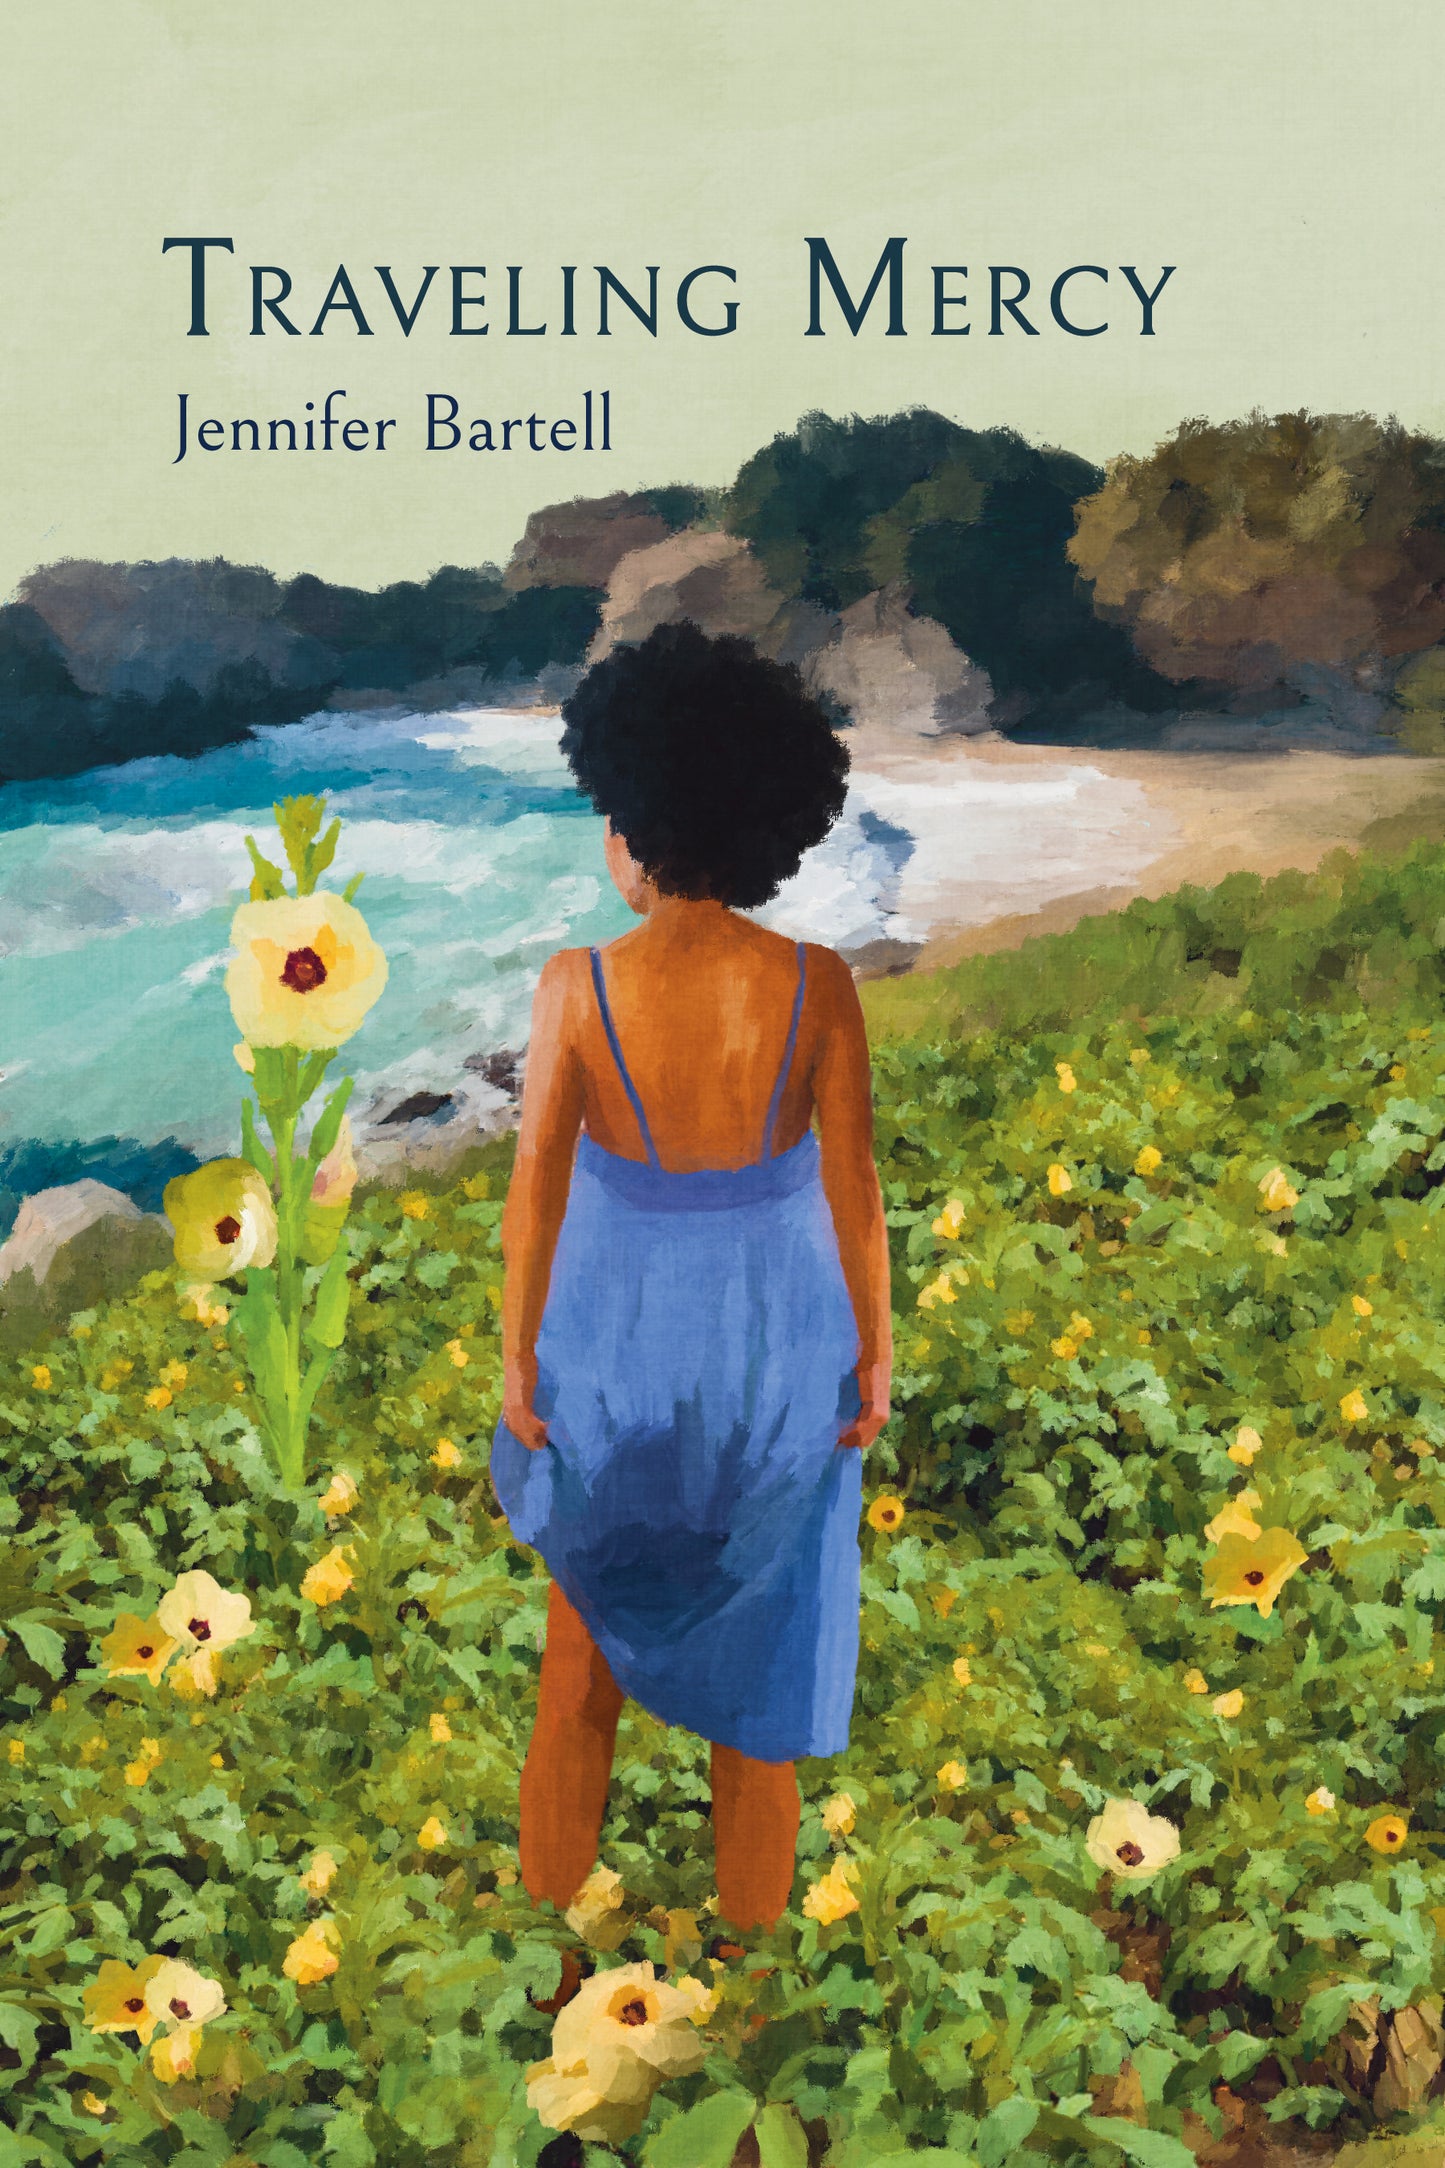 TRAVELING MERCY by Jennifer Bartell